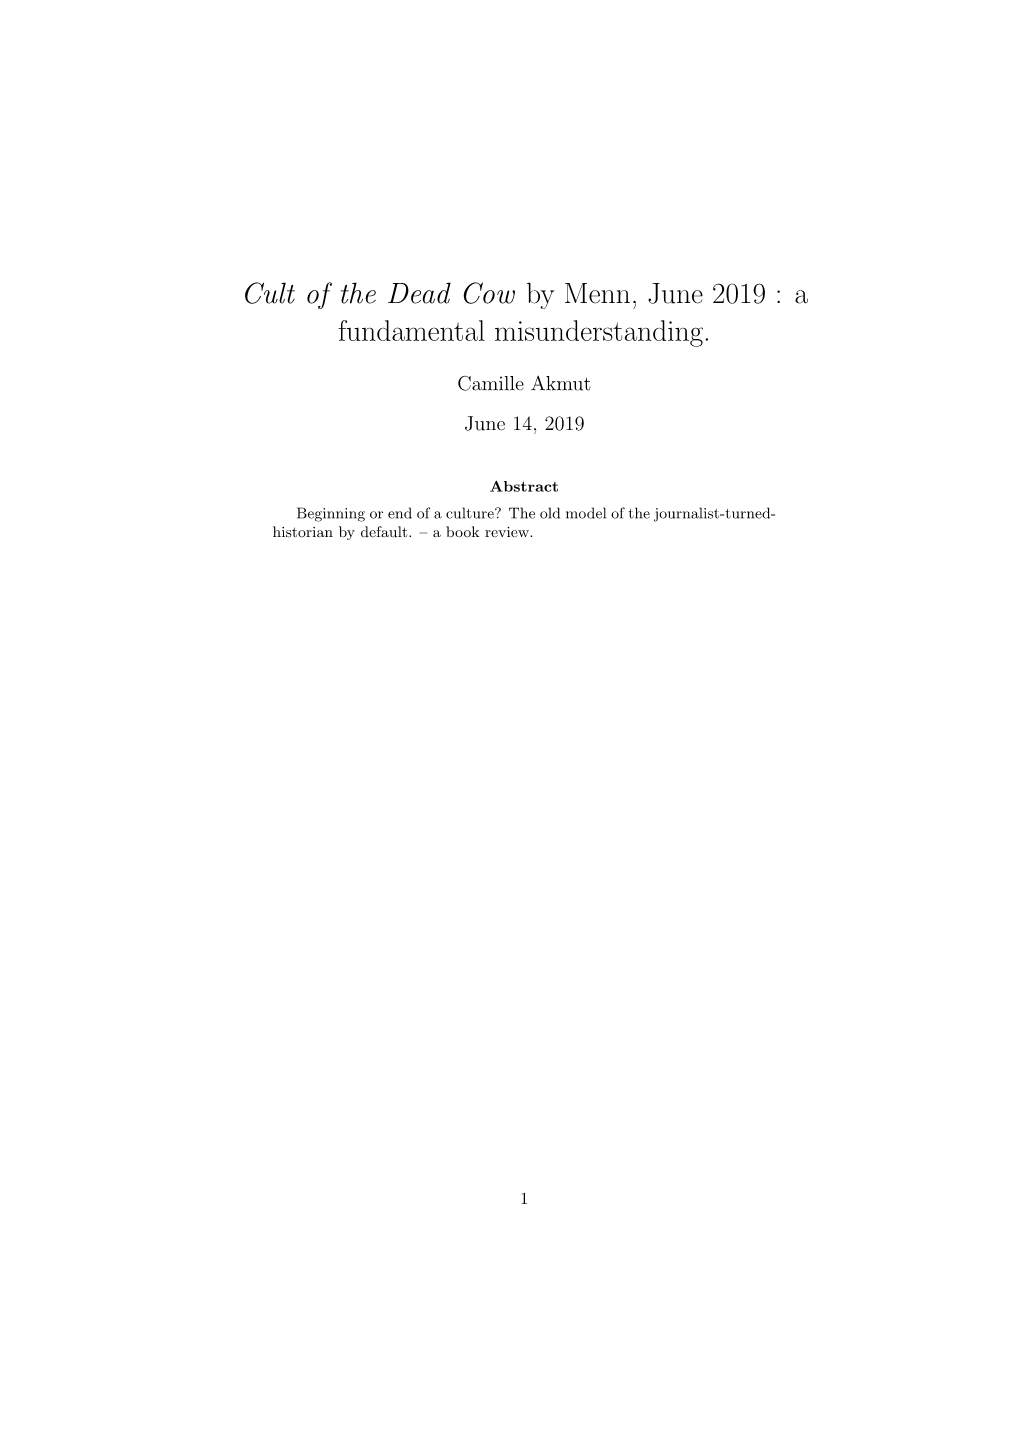 Cult of the Dead Cow by Menn, June 2019 : a Fundamental Misunderstanding